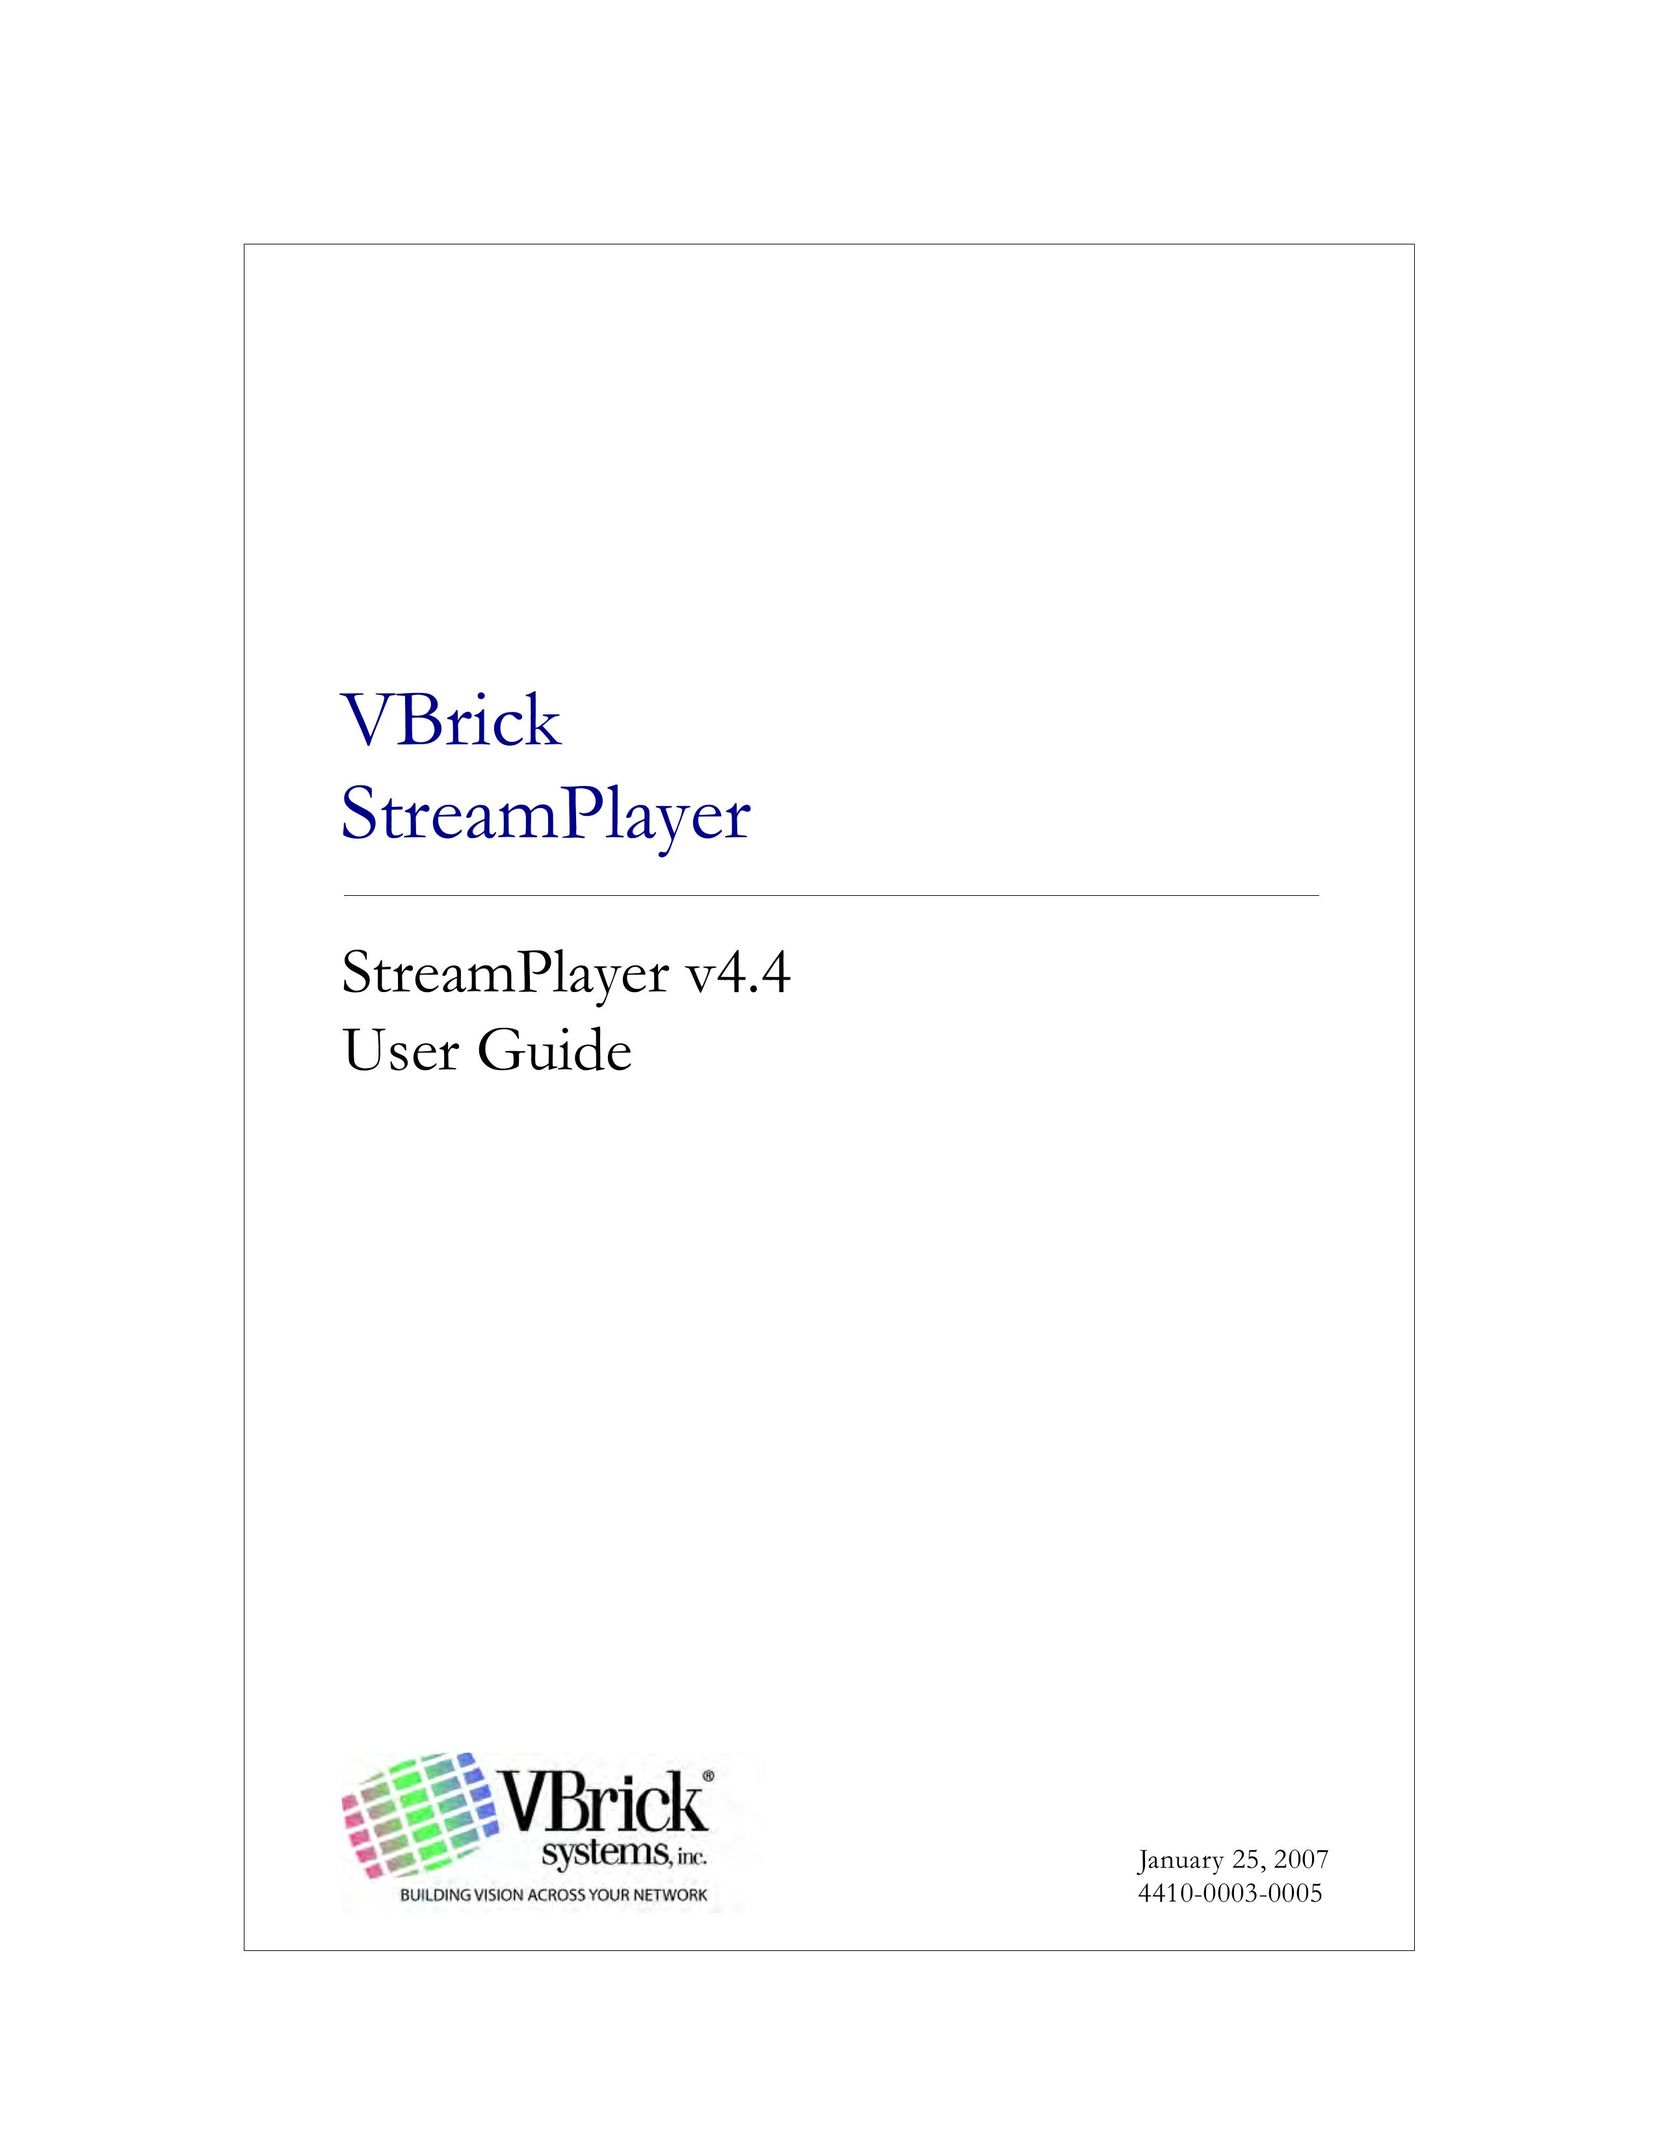 VBrick Systems v4.4 MP3 Player User Manual